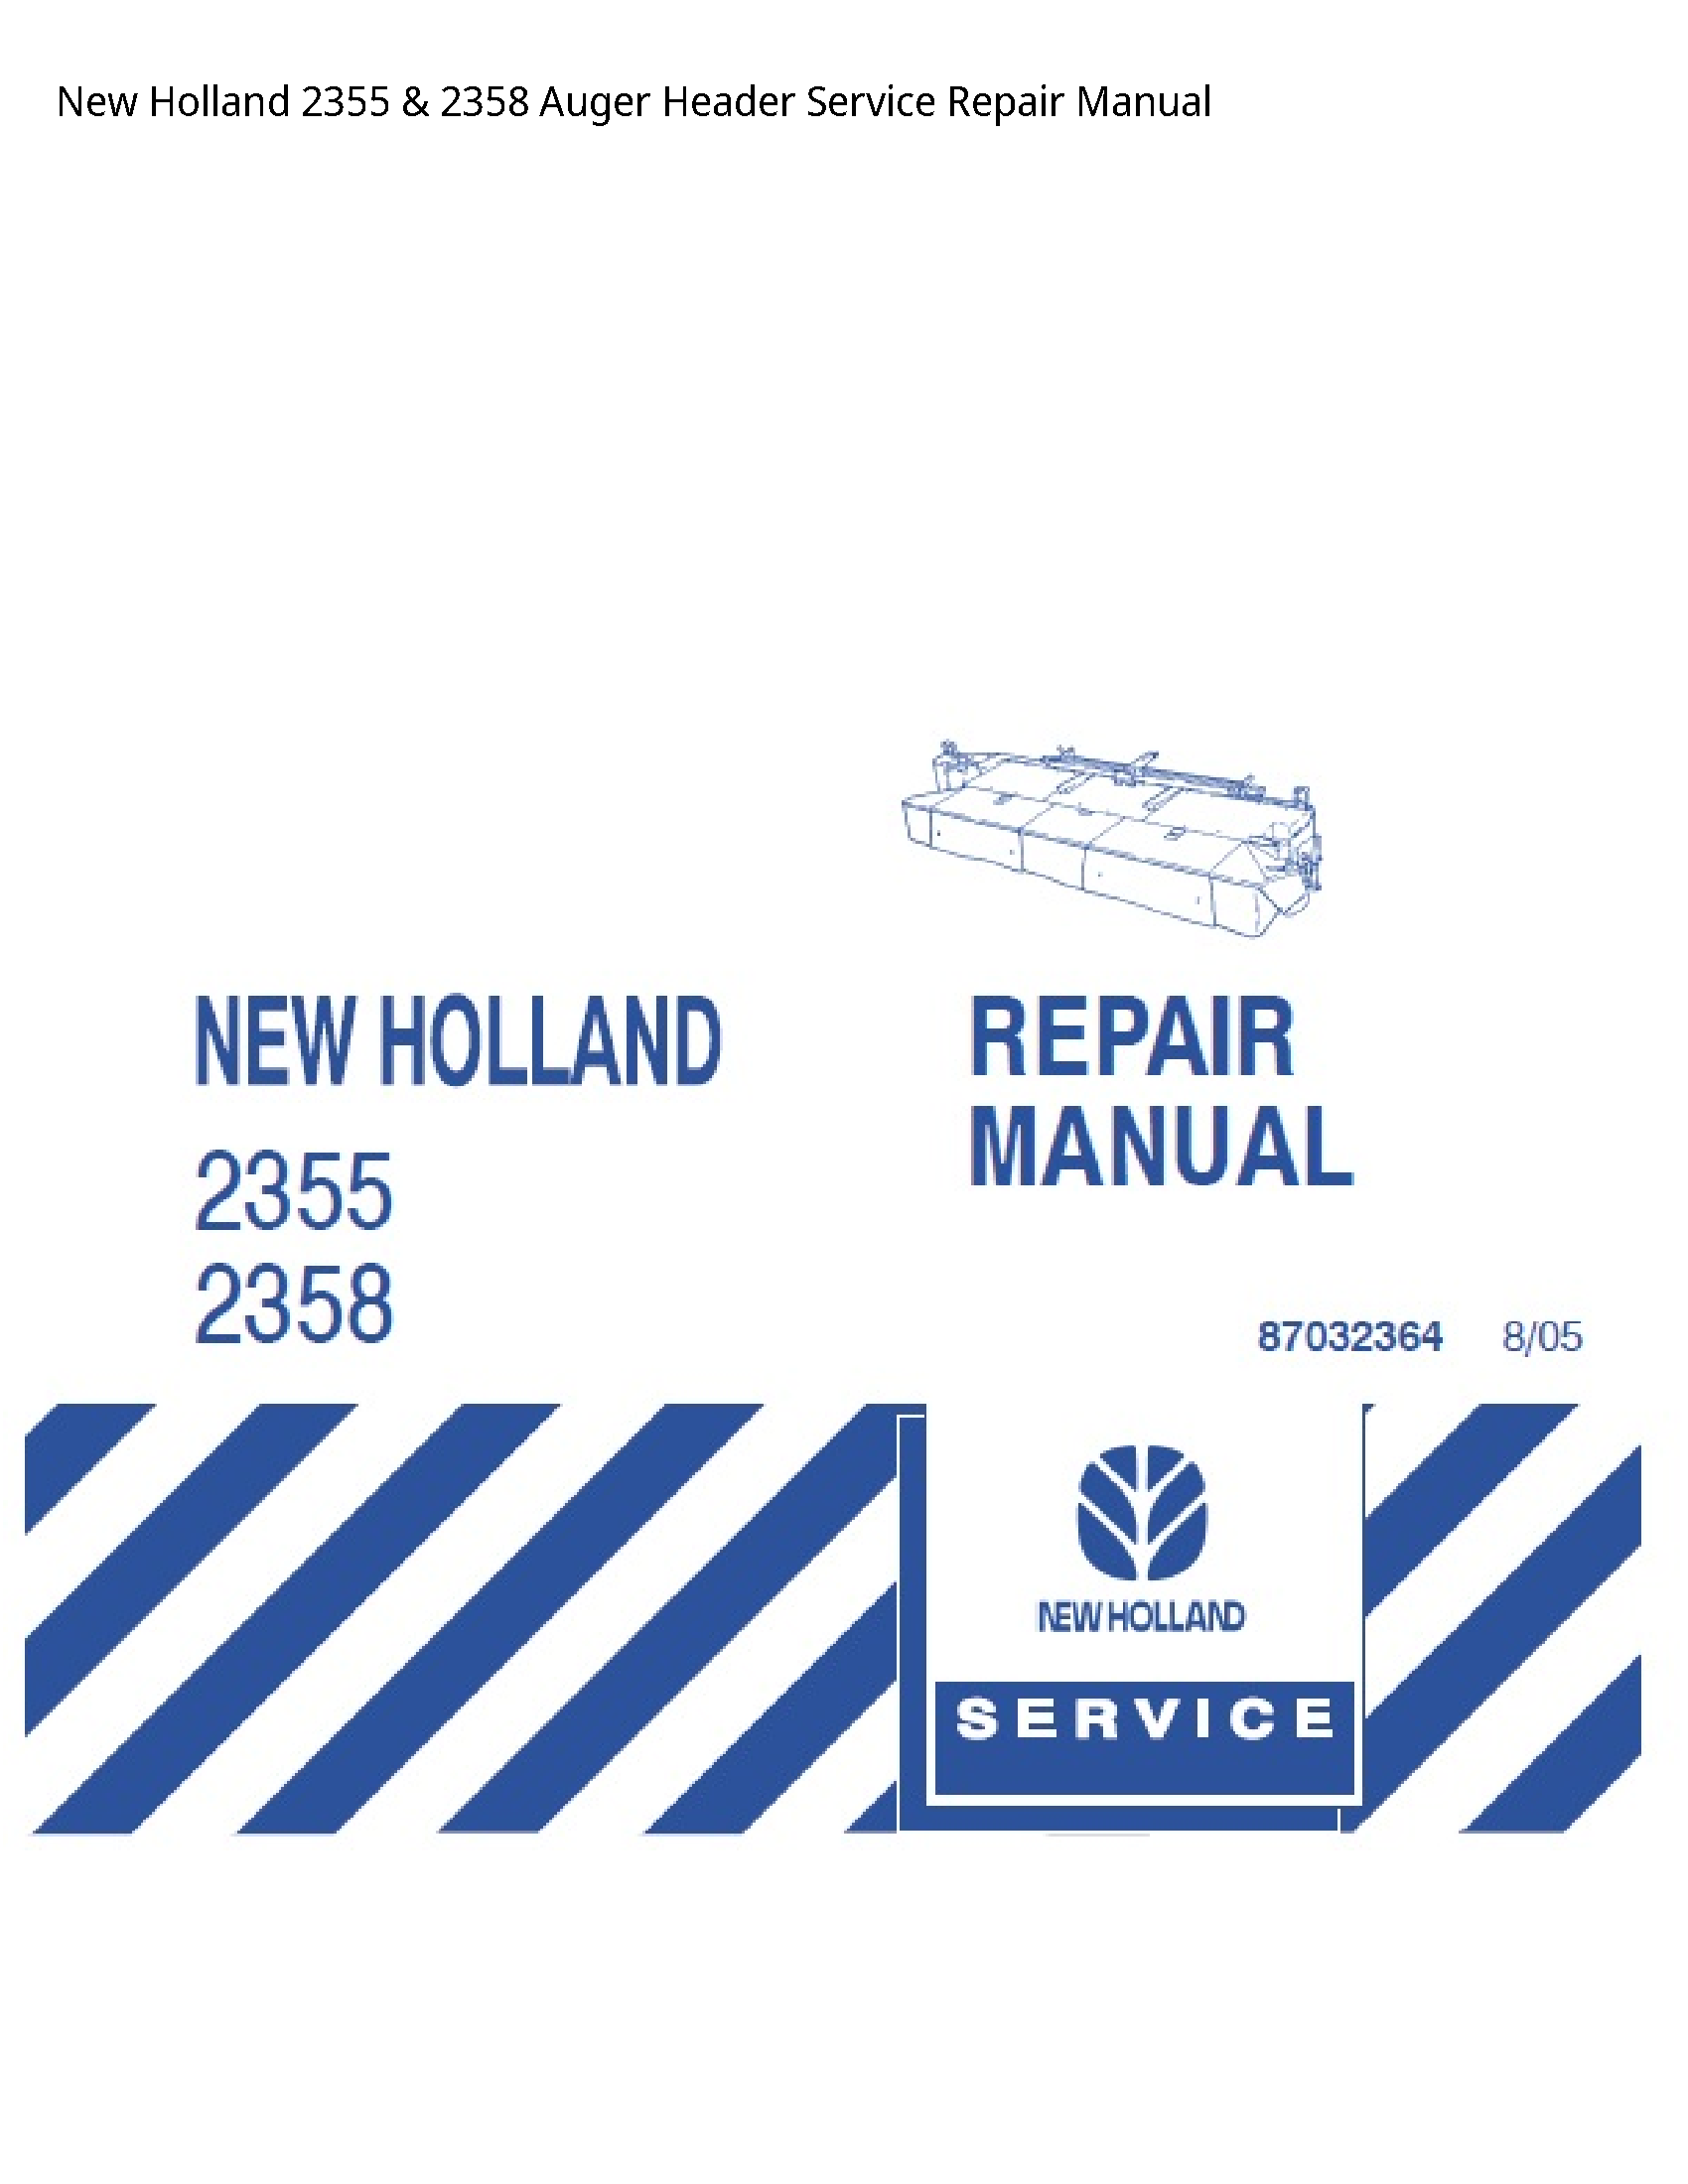 New Holland 2355 Auger Header manual